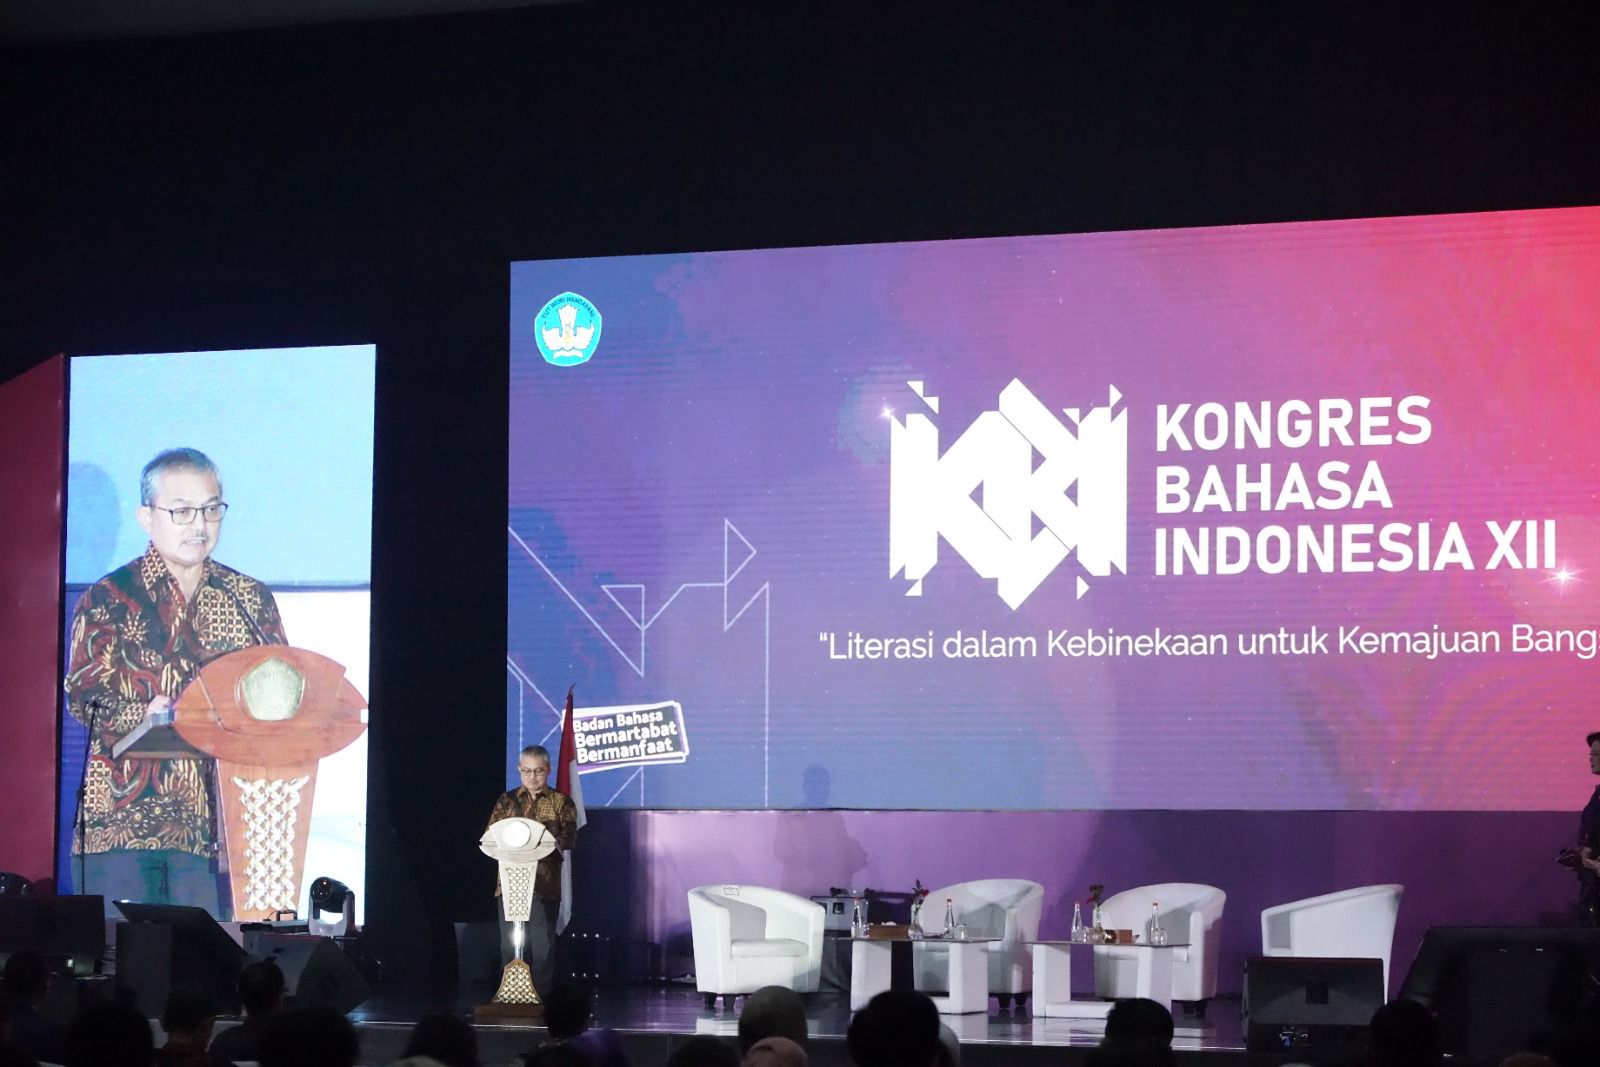 Kongres Bahasa Indonesia XII: Perkuat Peran Bahasa Indonesia dalam Kehidupan Berbangsa